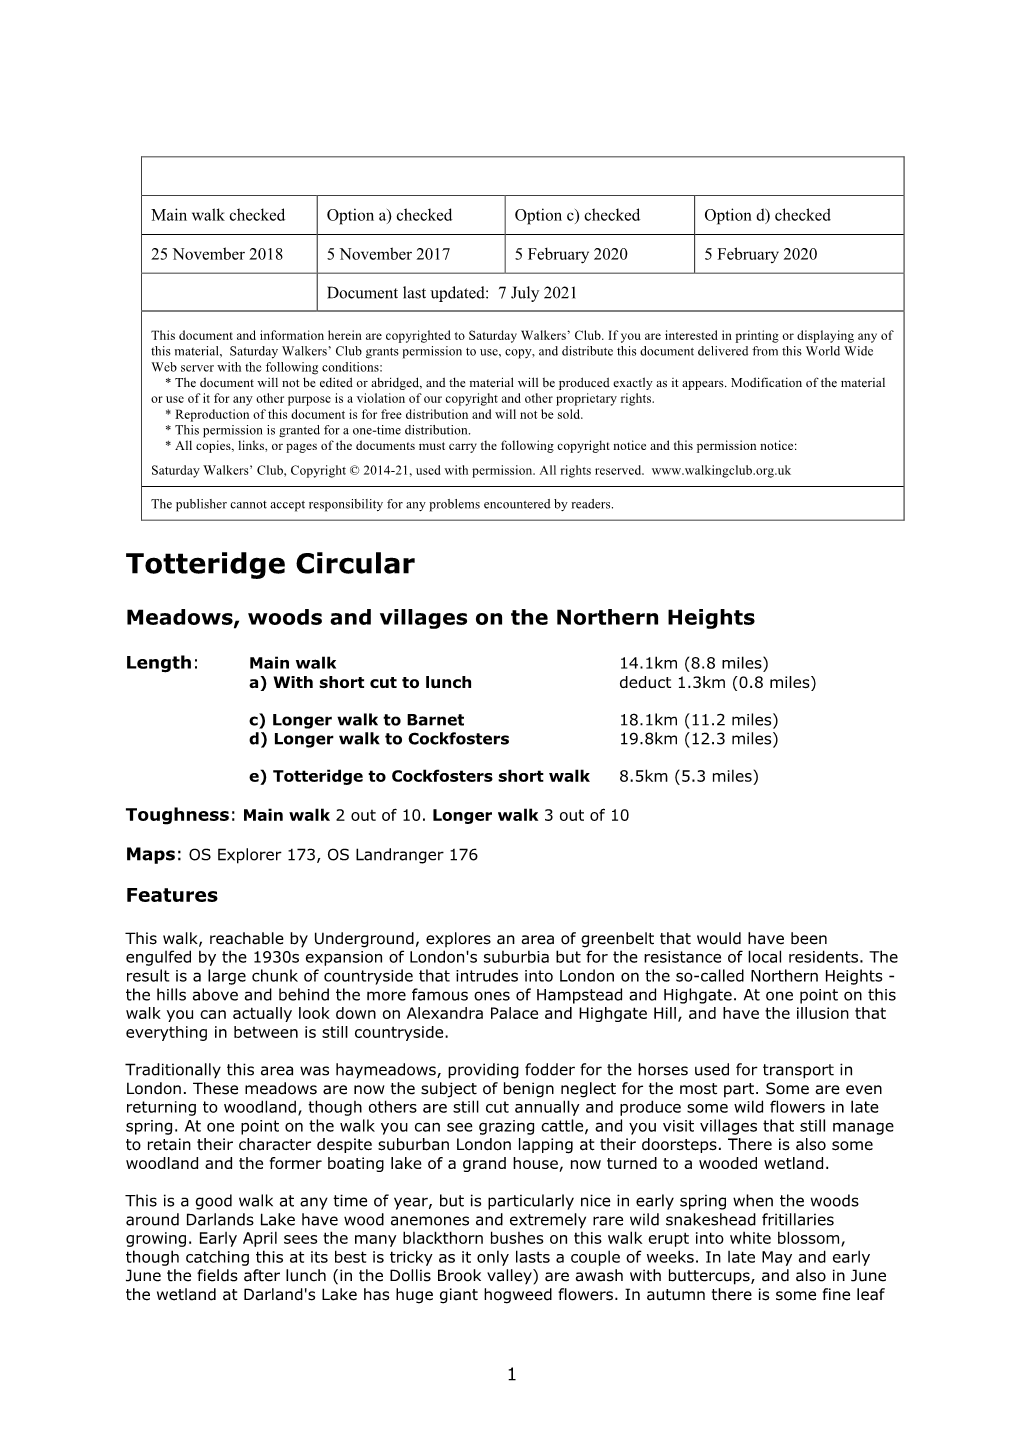 Totteridge Circular